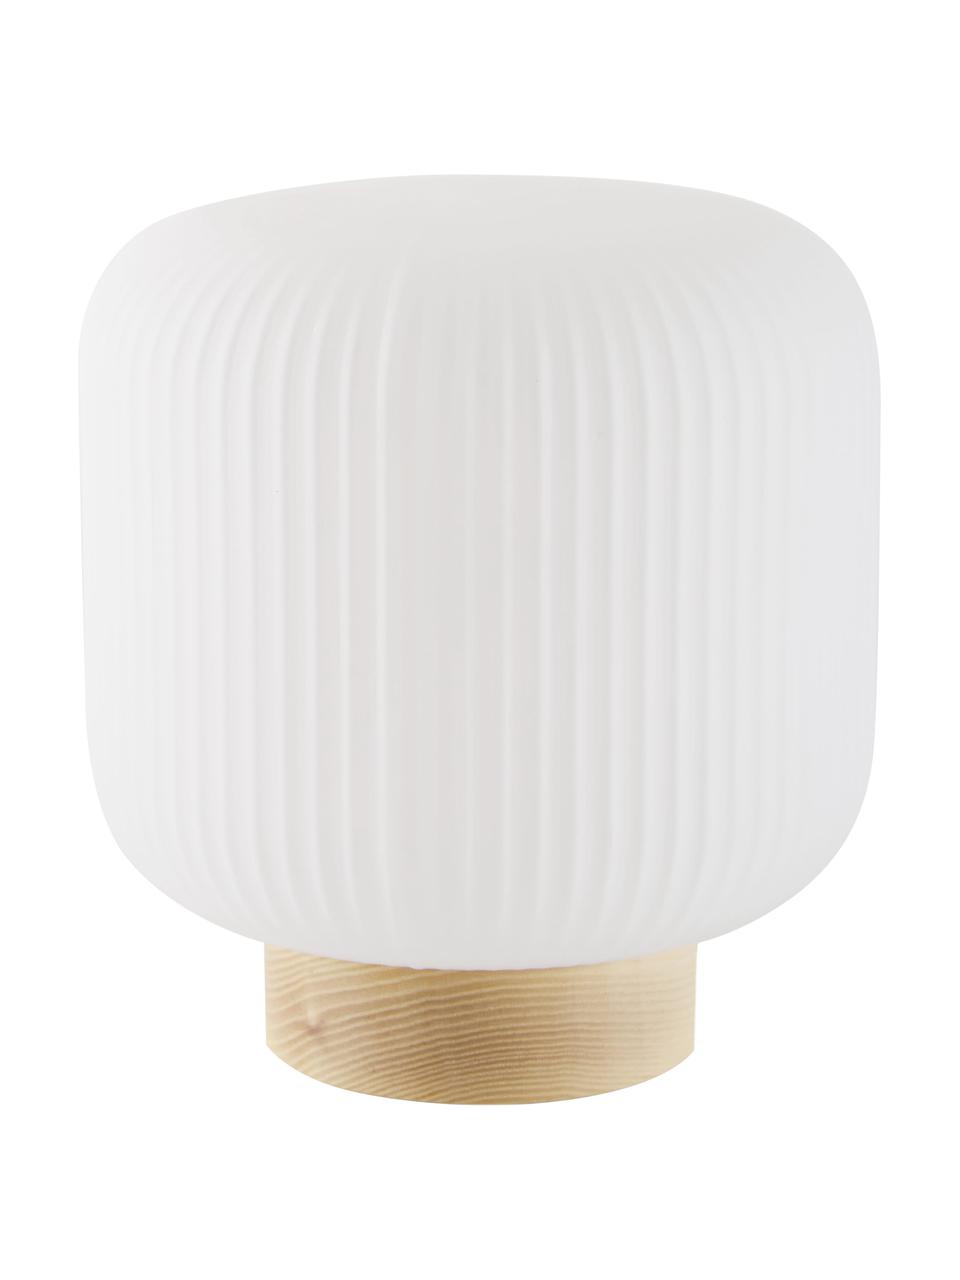 Kleine Tischlampe Milford, Lampenschirm: Opalglas, Lampenfuß: Holz, Opalweiß, Helles Holz, Ø 20 x H 21 cm